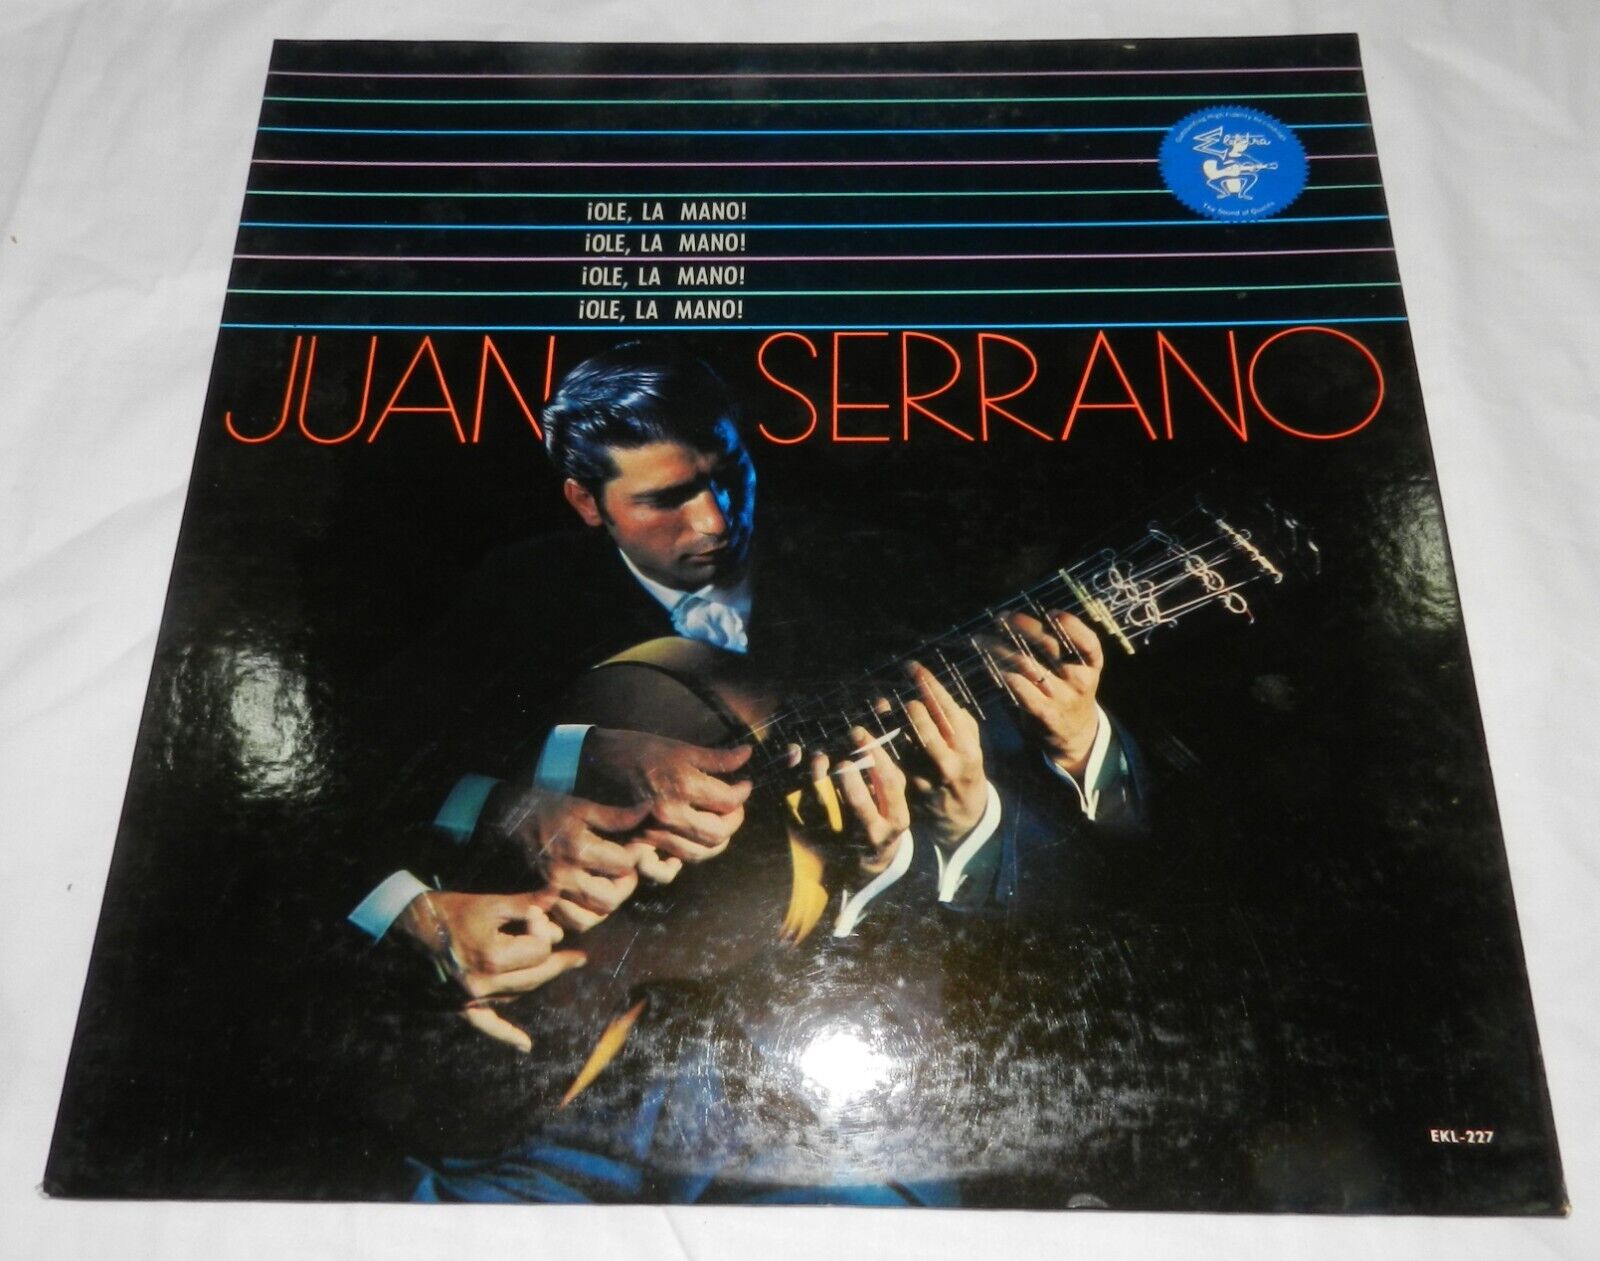 Vintage Vinyl Record Album - Promotional Copy - Juan Serrano - Ole, La Mano